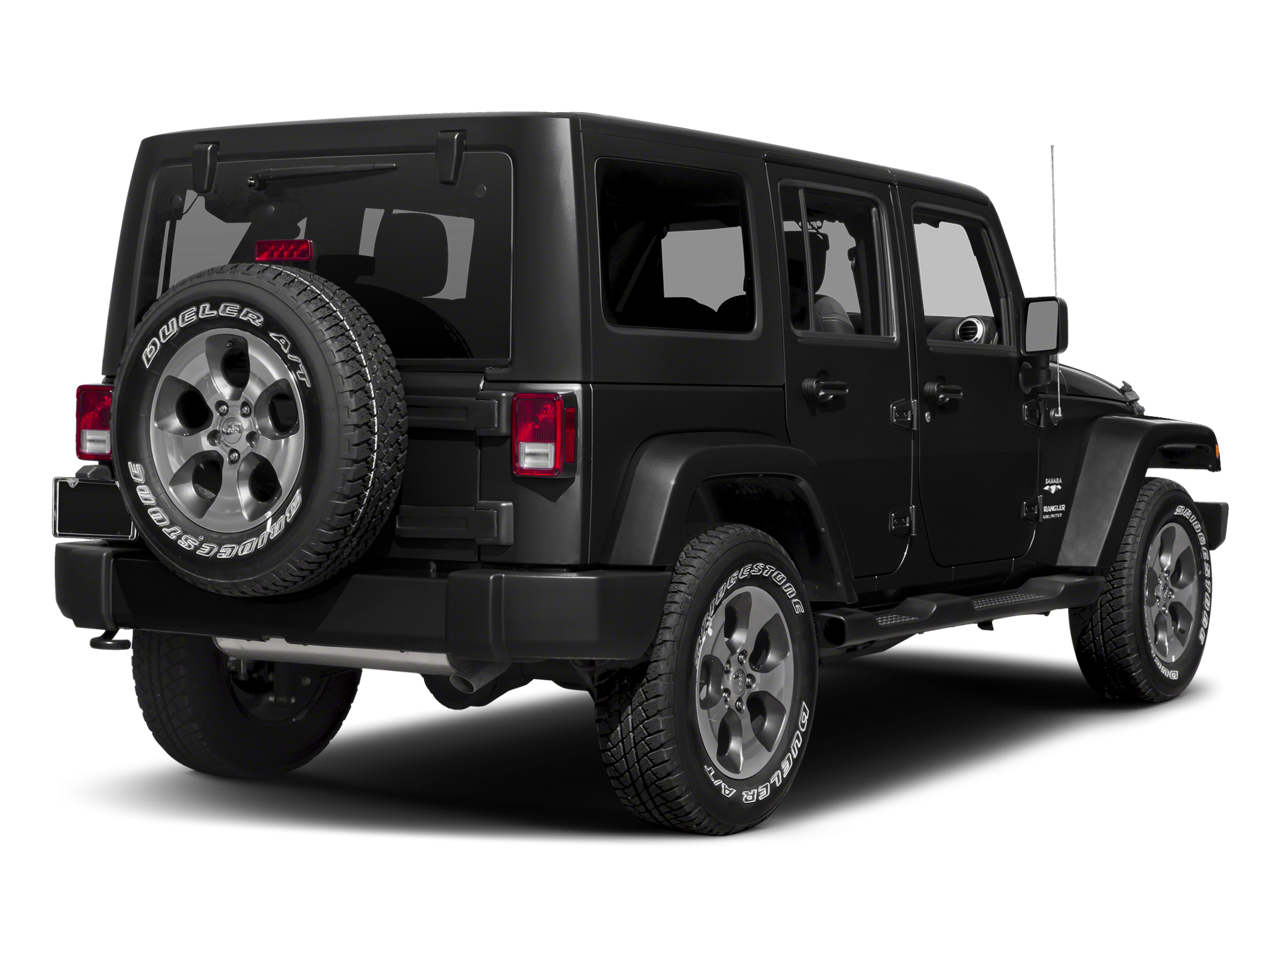 2016 Jeep Wrangler Unlimited Sahara in Oklahoma City, OK | Oklahoma City Jeep  Wrangler Unlimited | Joe Cooper Ford of Edmond